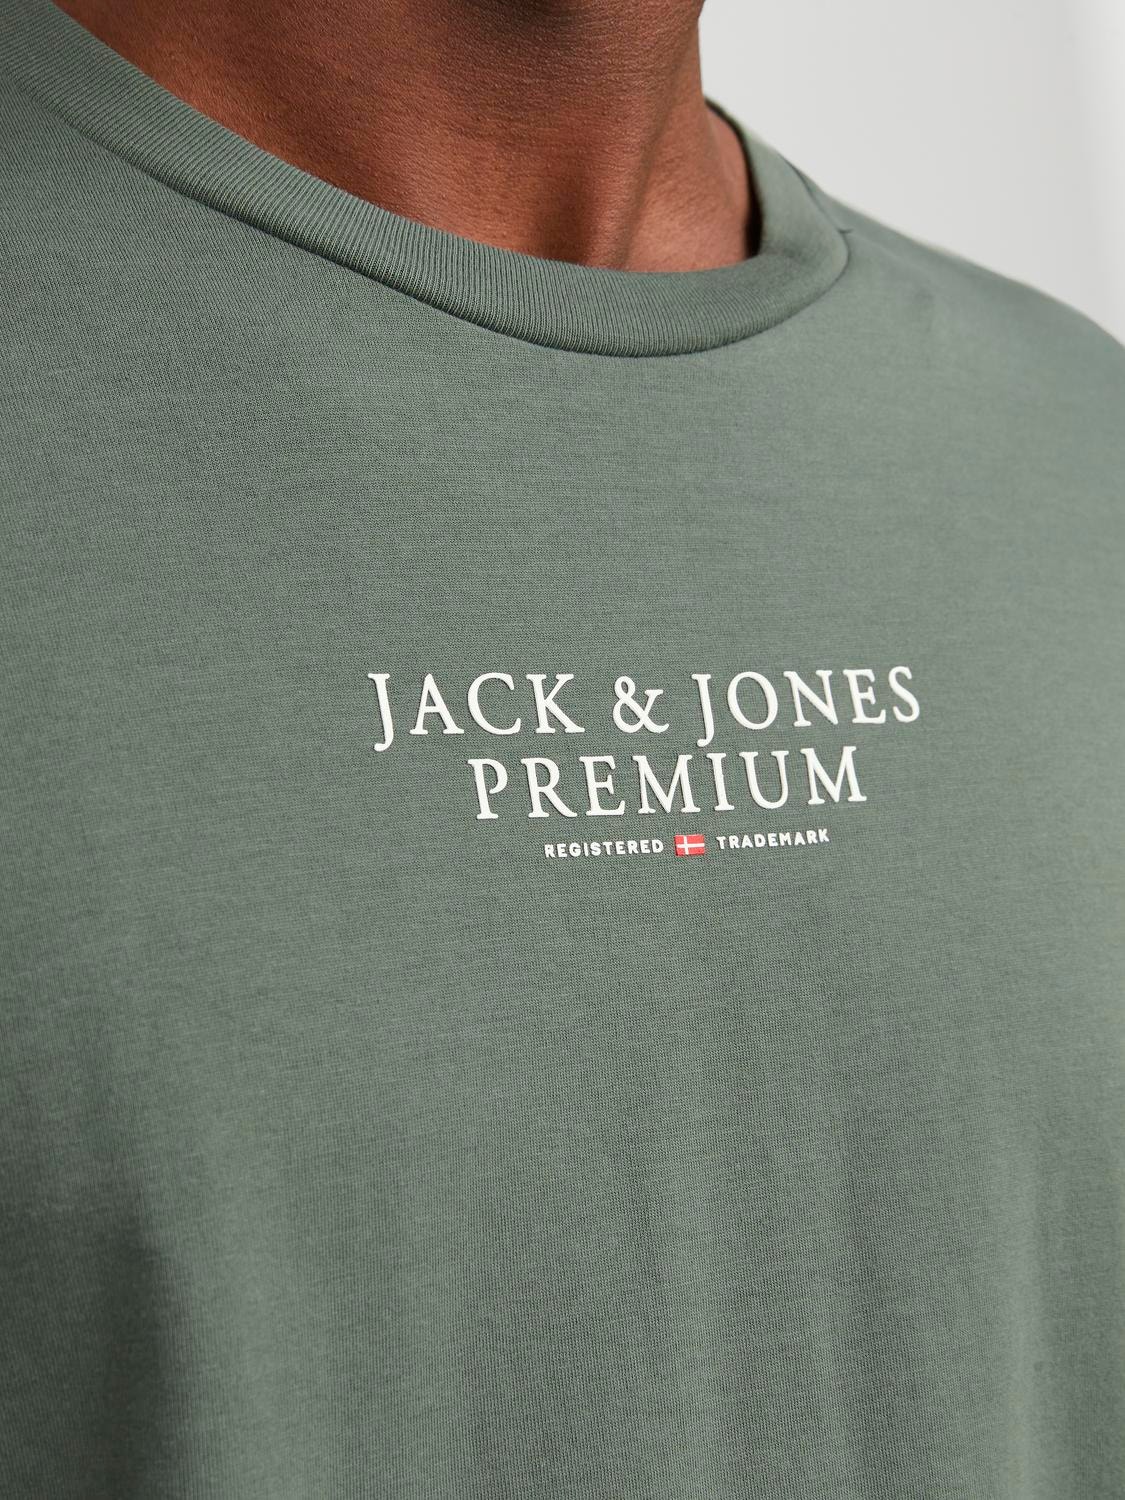 Jack & Jones Camiseta Logotipo Cuello redondo -Laurel Wreath - 12217167